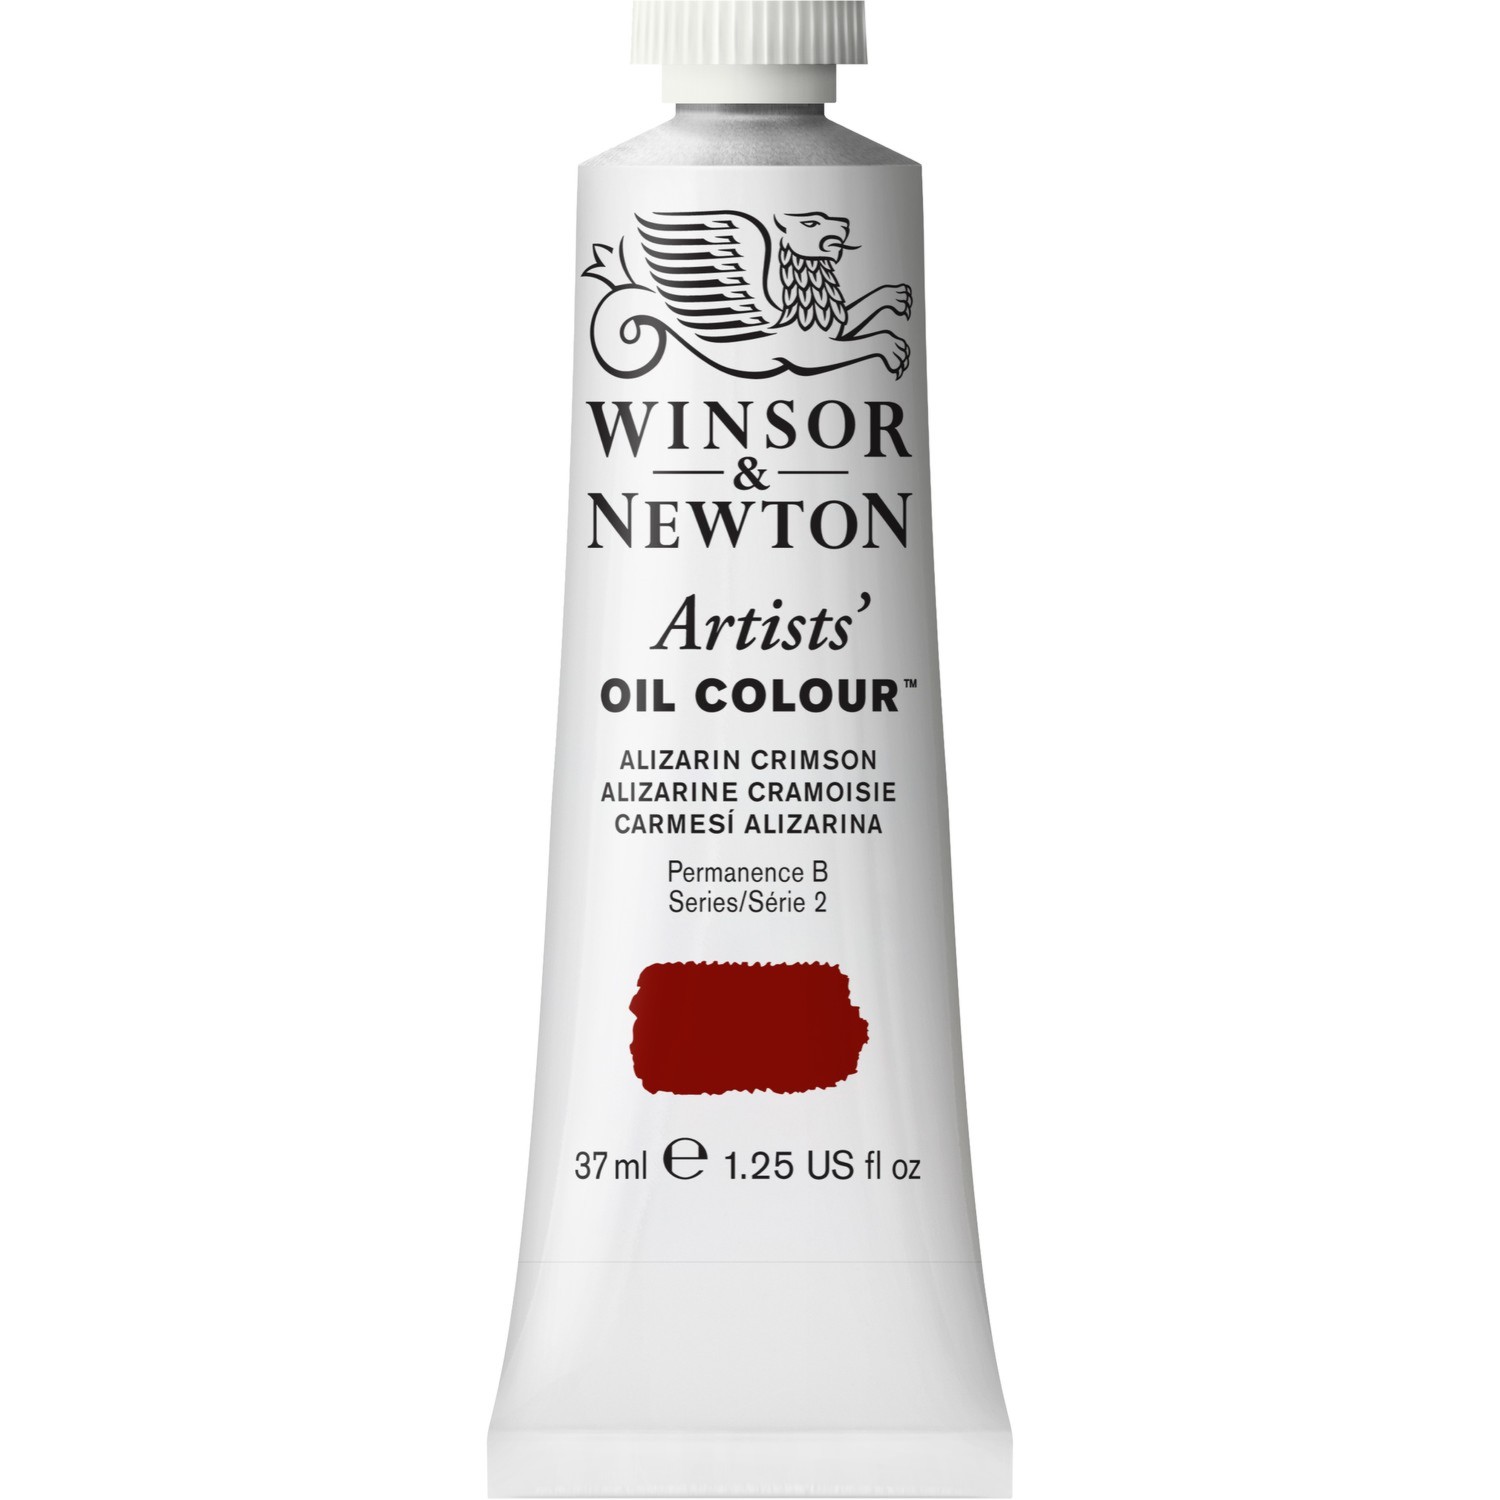 Winsor and Newton 37ml Artists' Oil Colours - Aliz Crimson Image 1